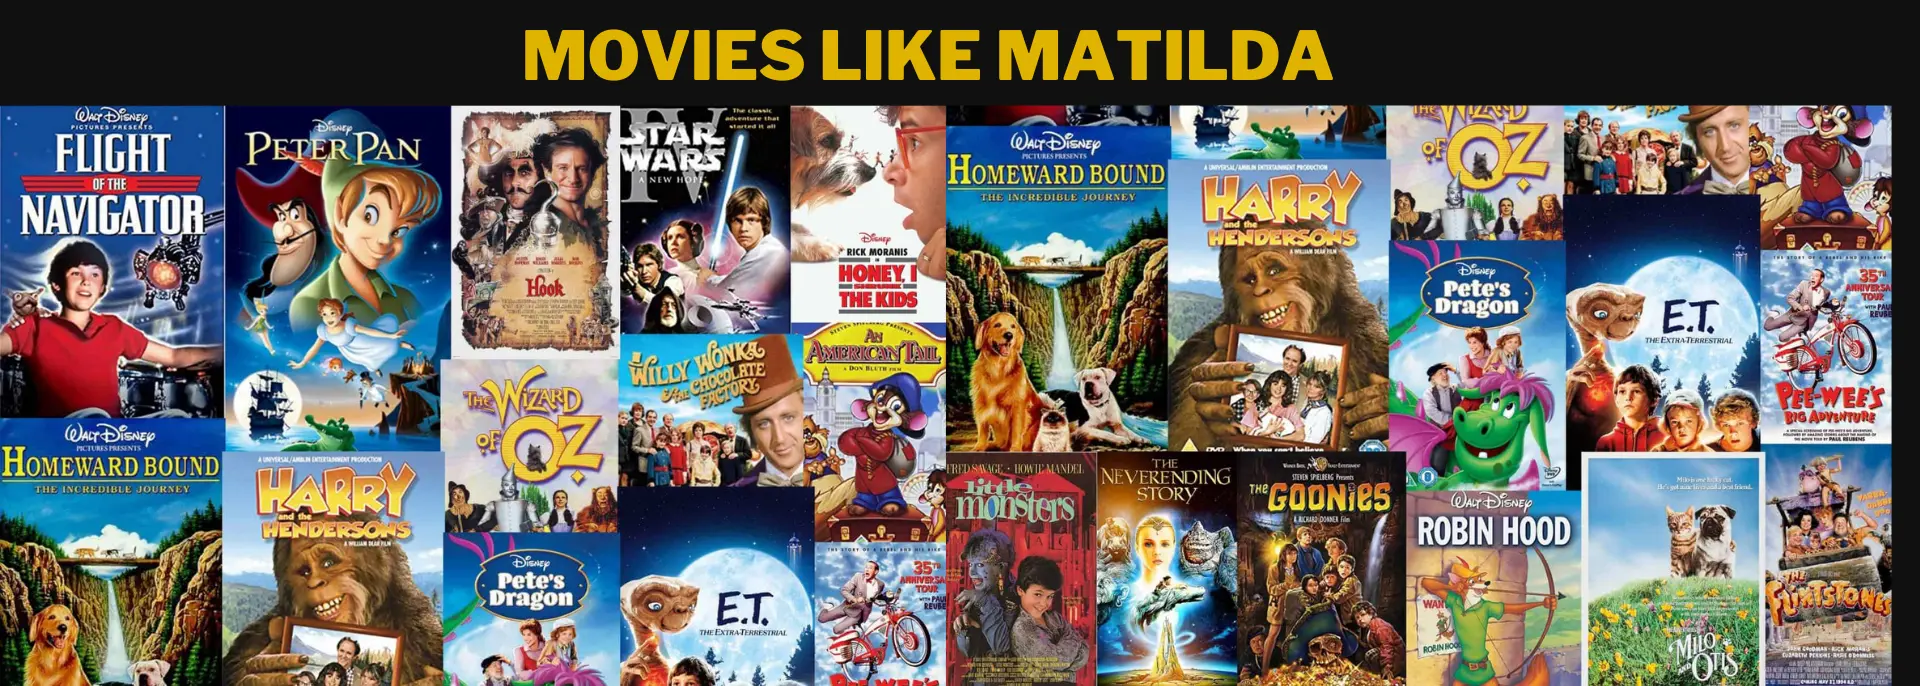 Movies Like Matilda